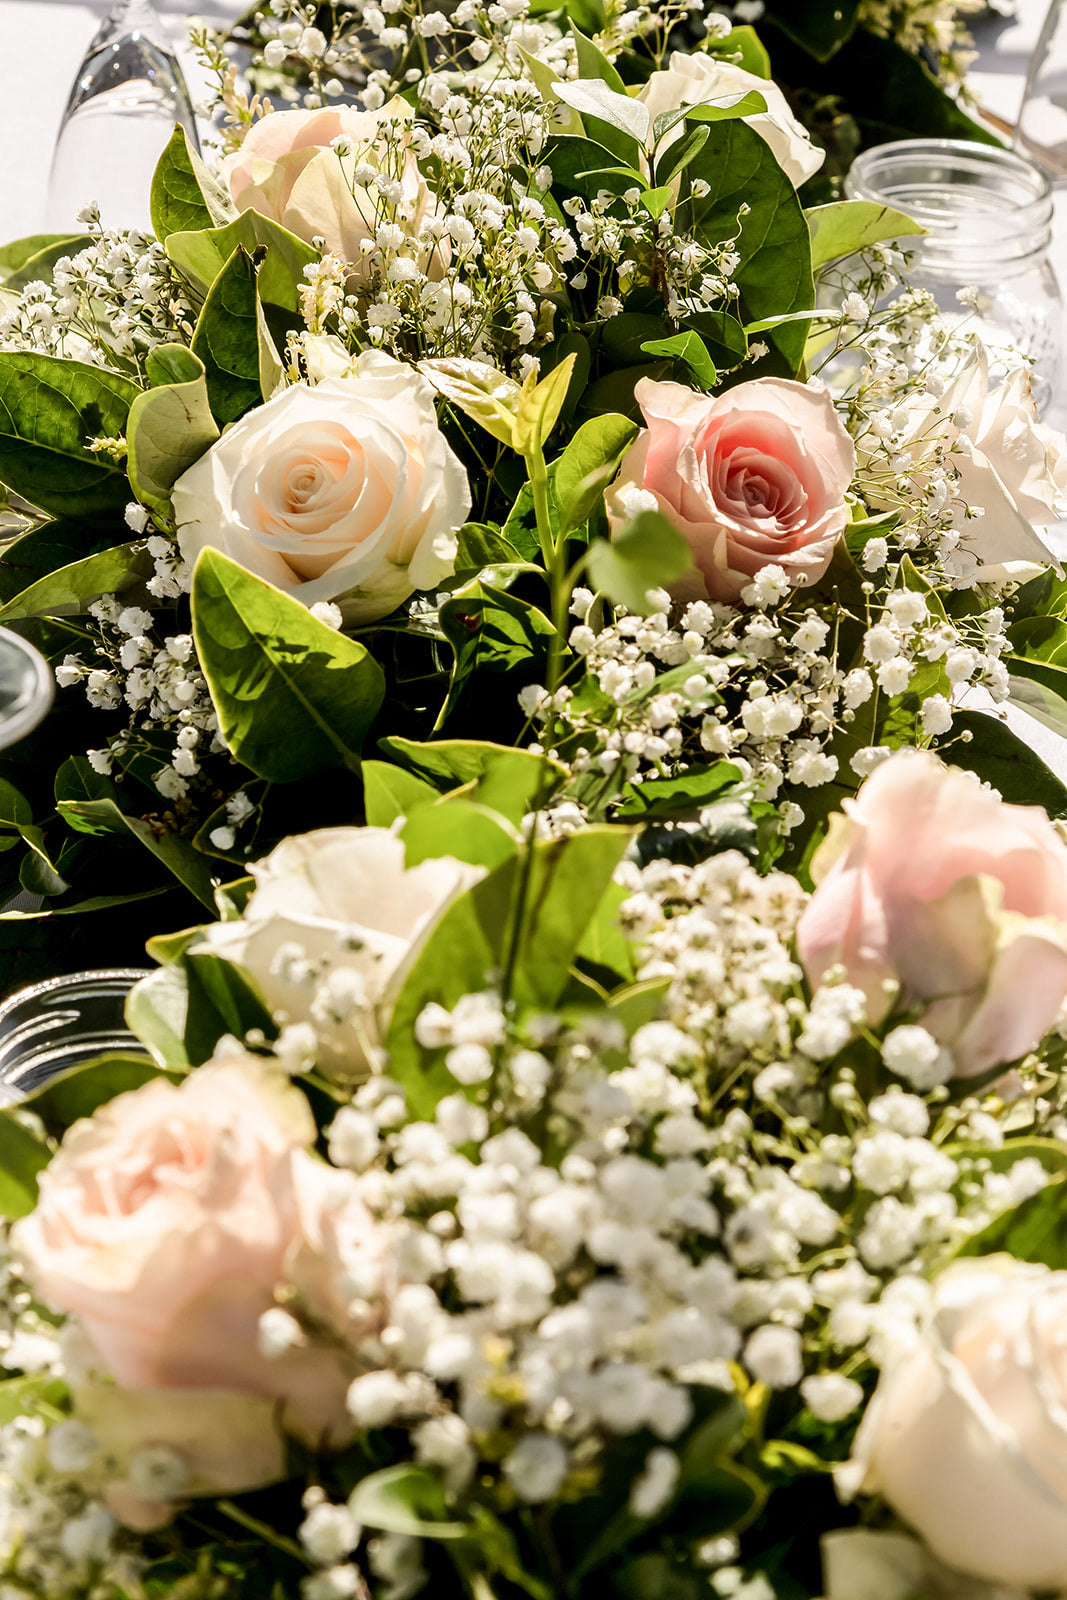 Choosing the right wedding flowers